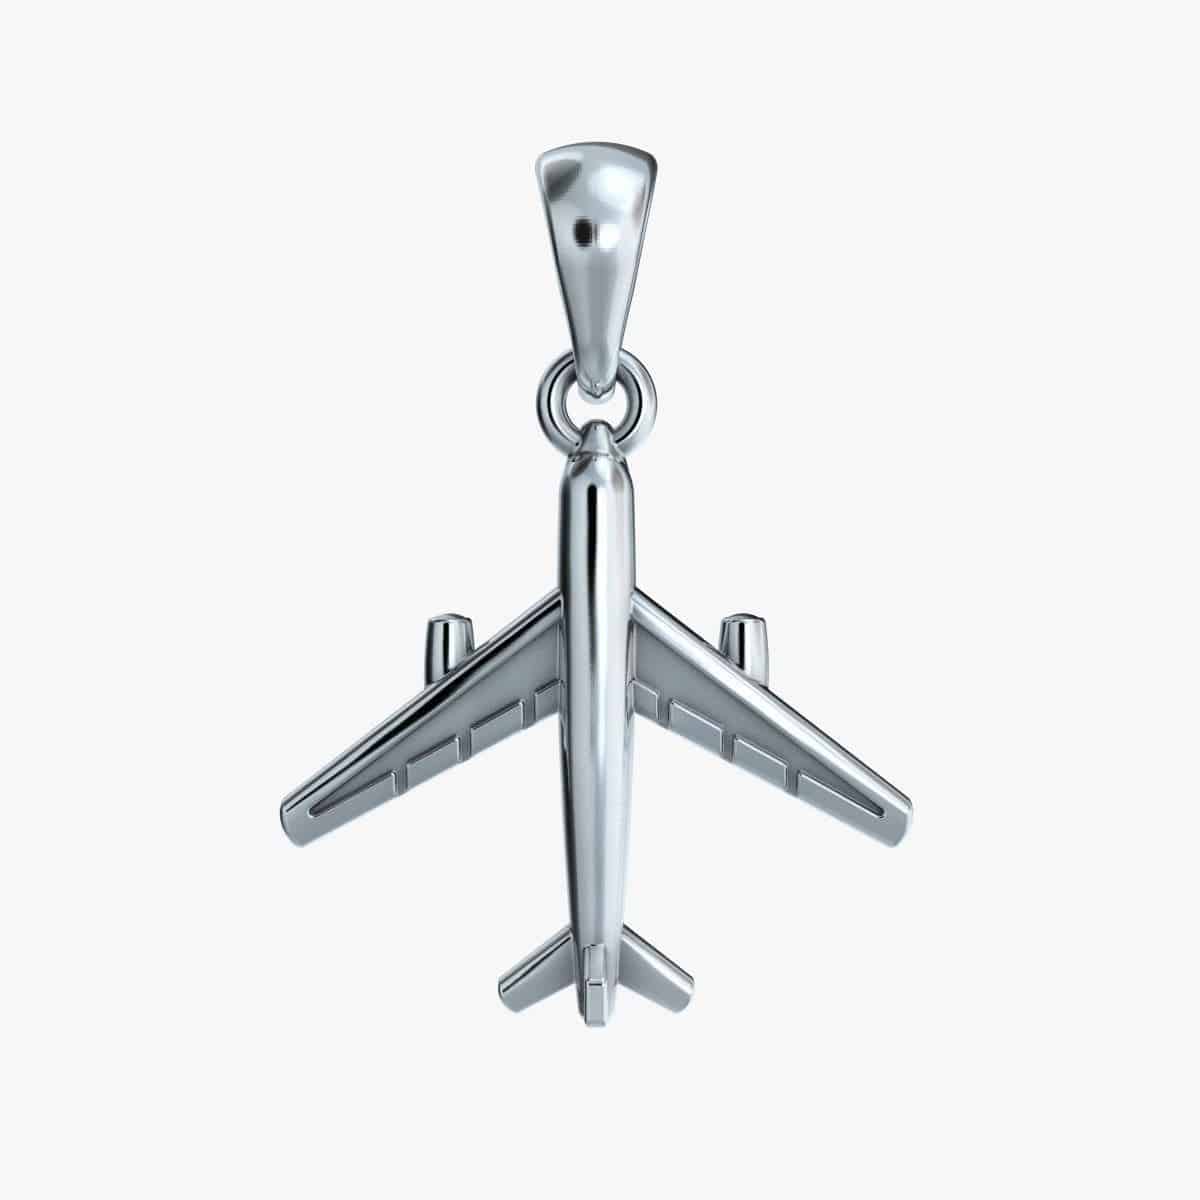 Jet Airplane Pendant Necklace